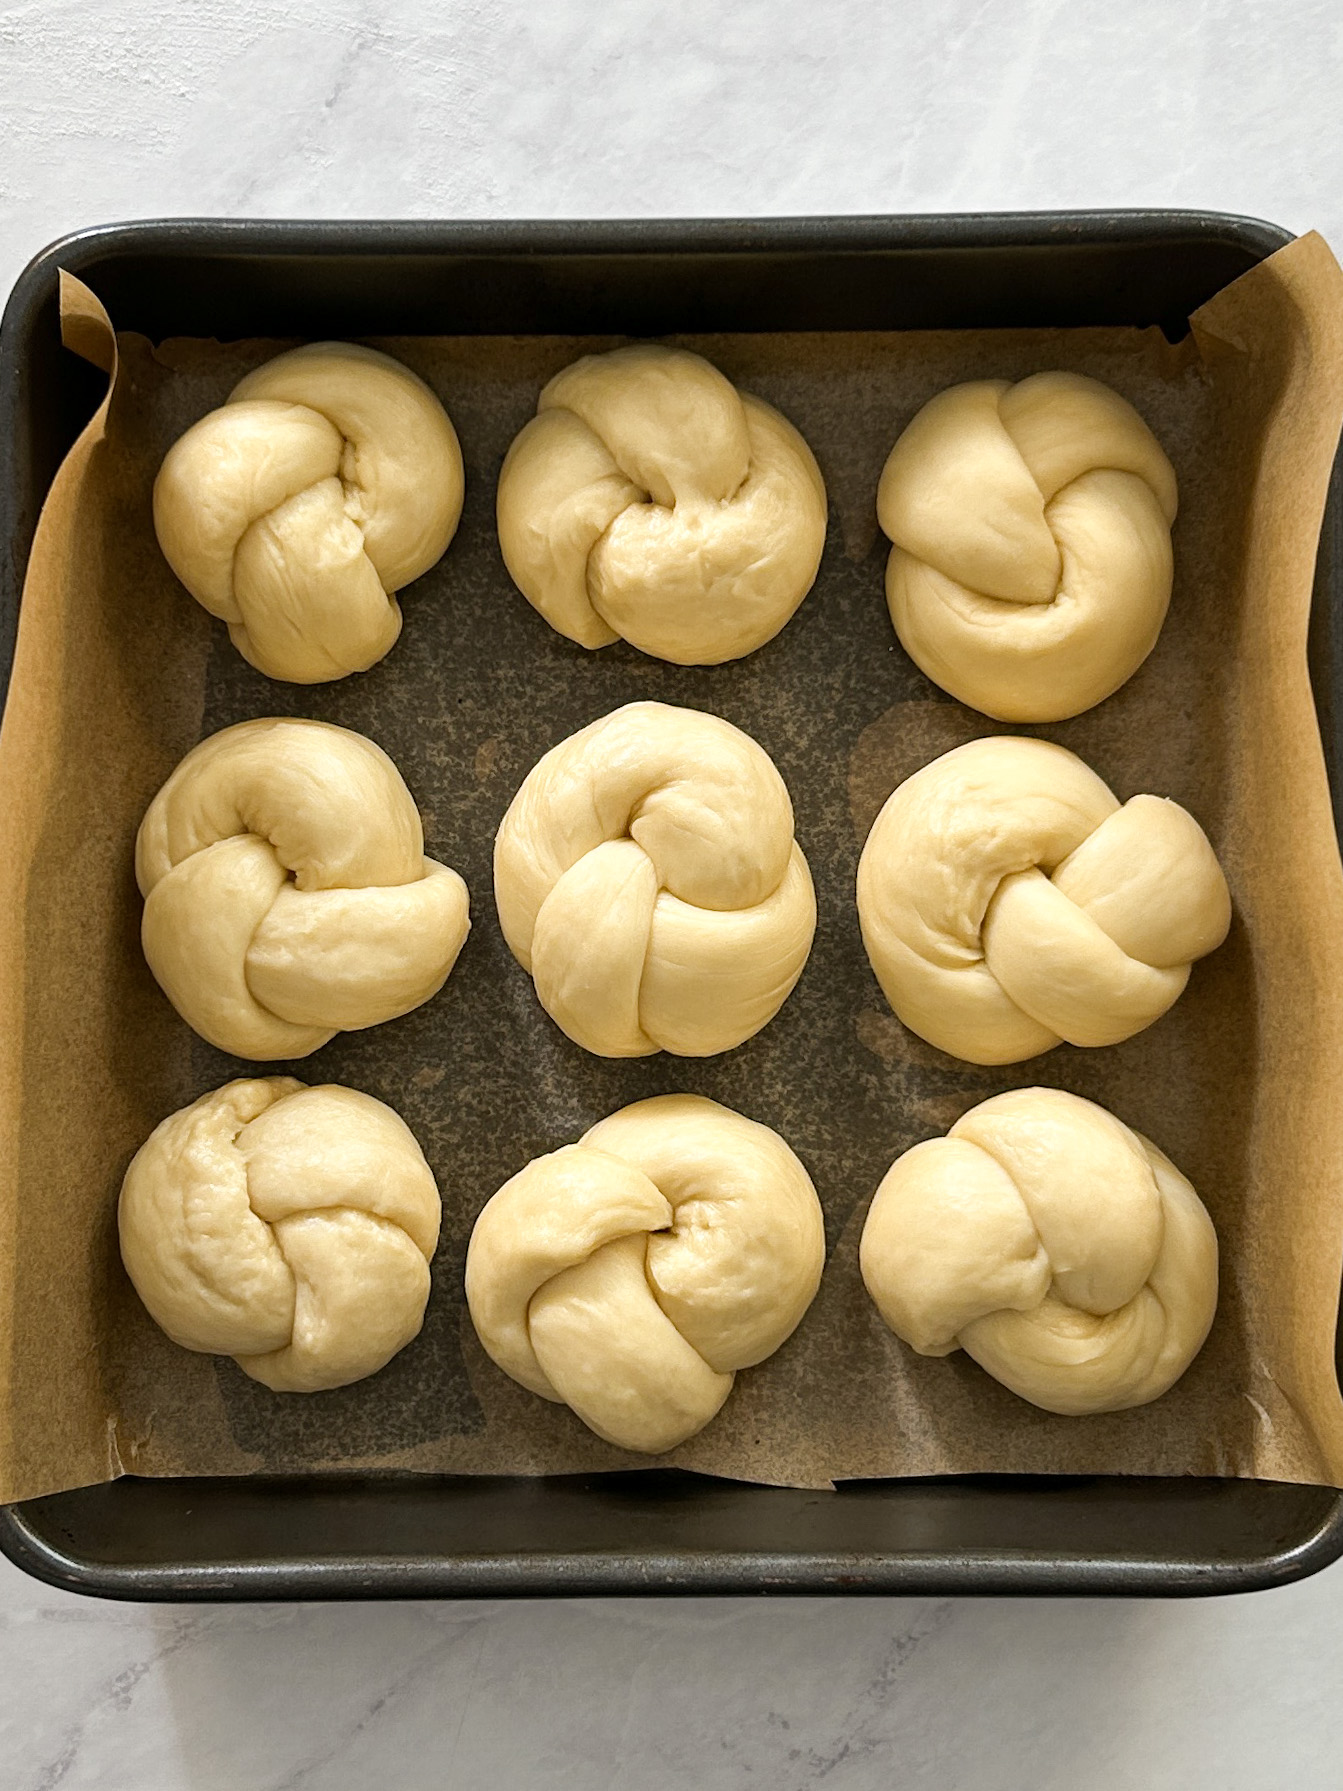 9 garlic knots in a pan before baking